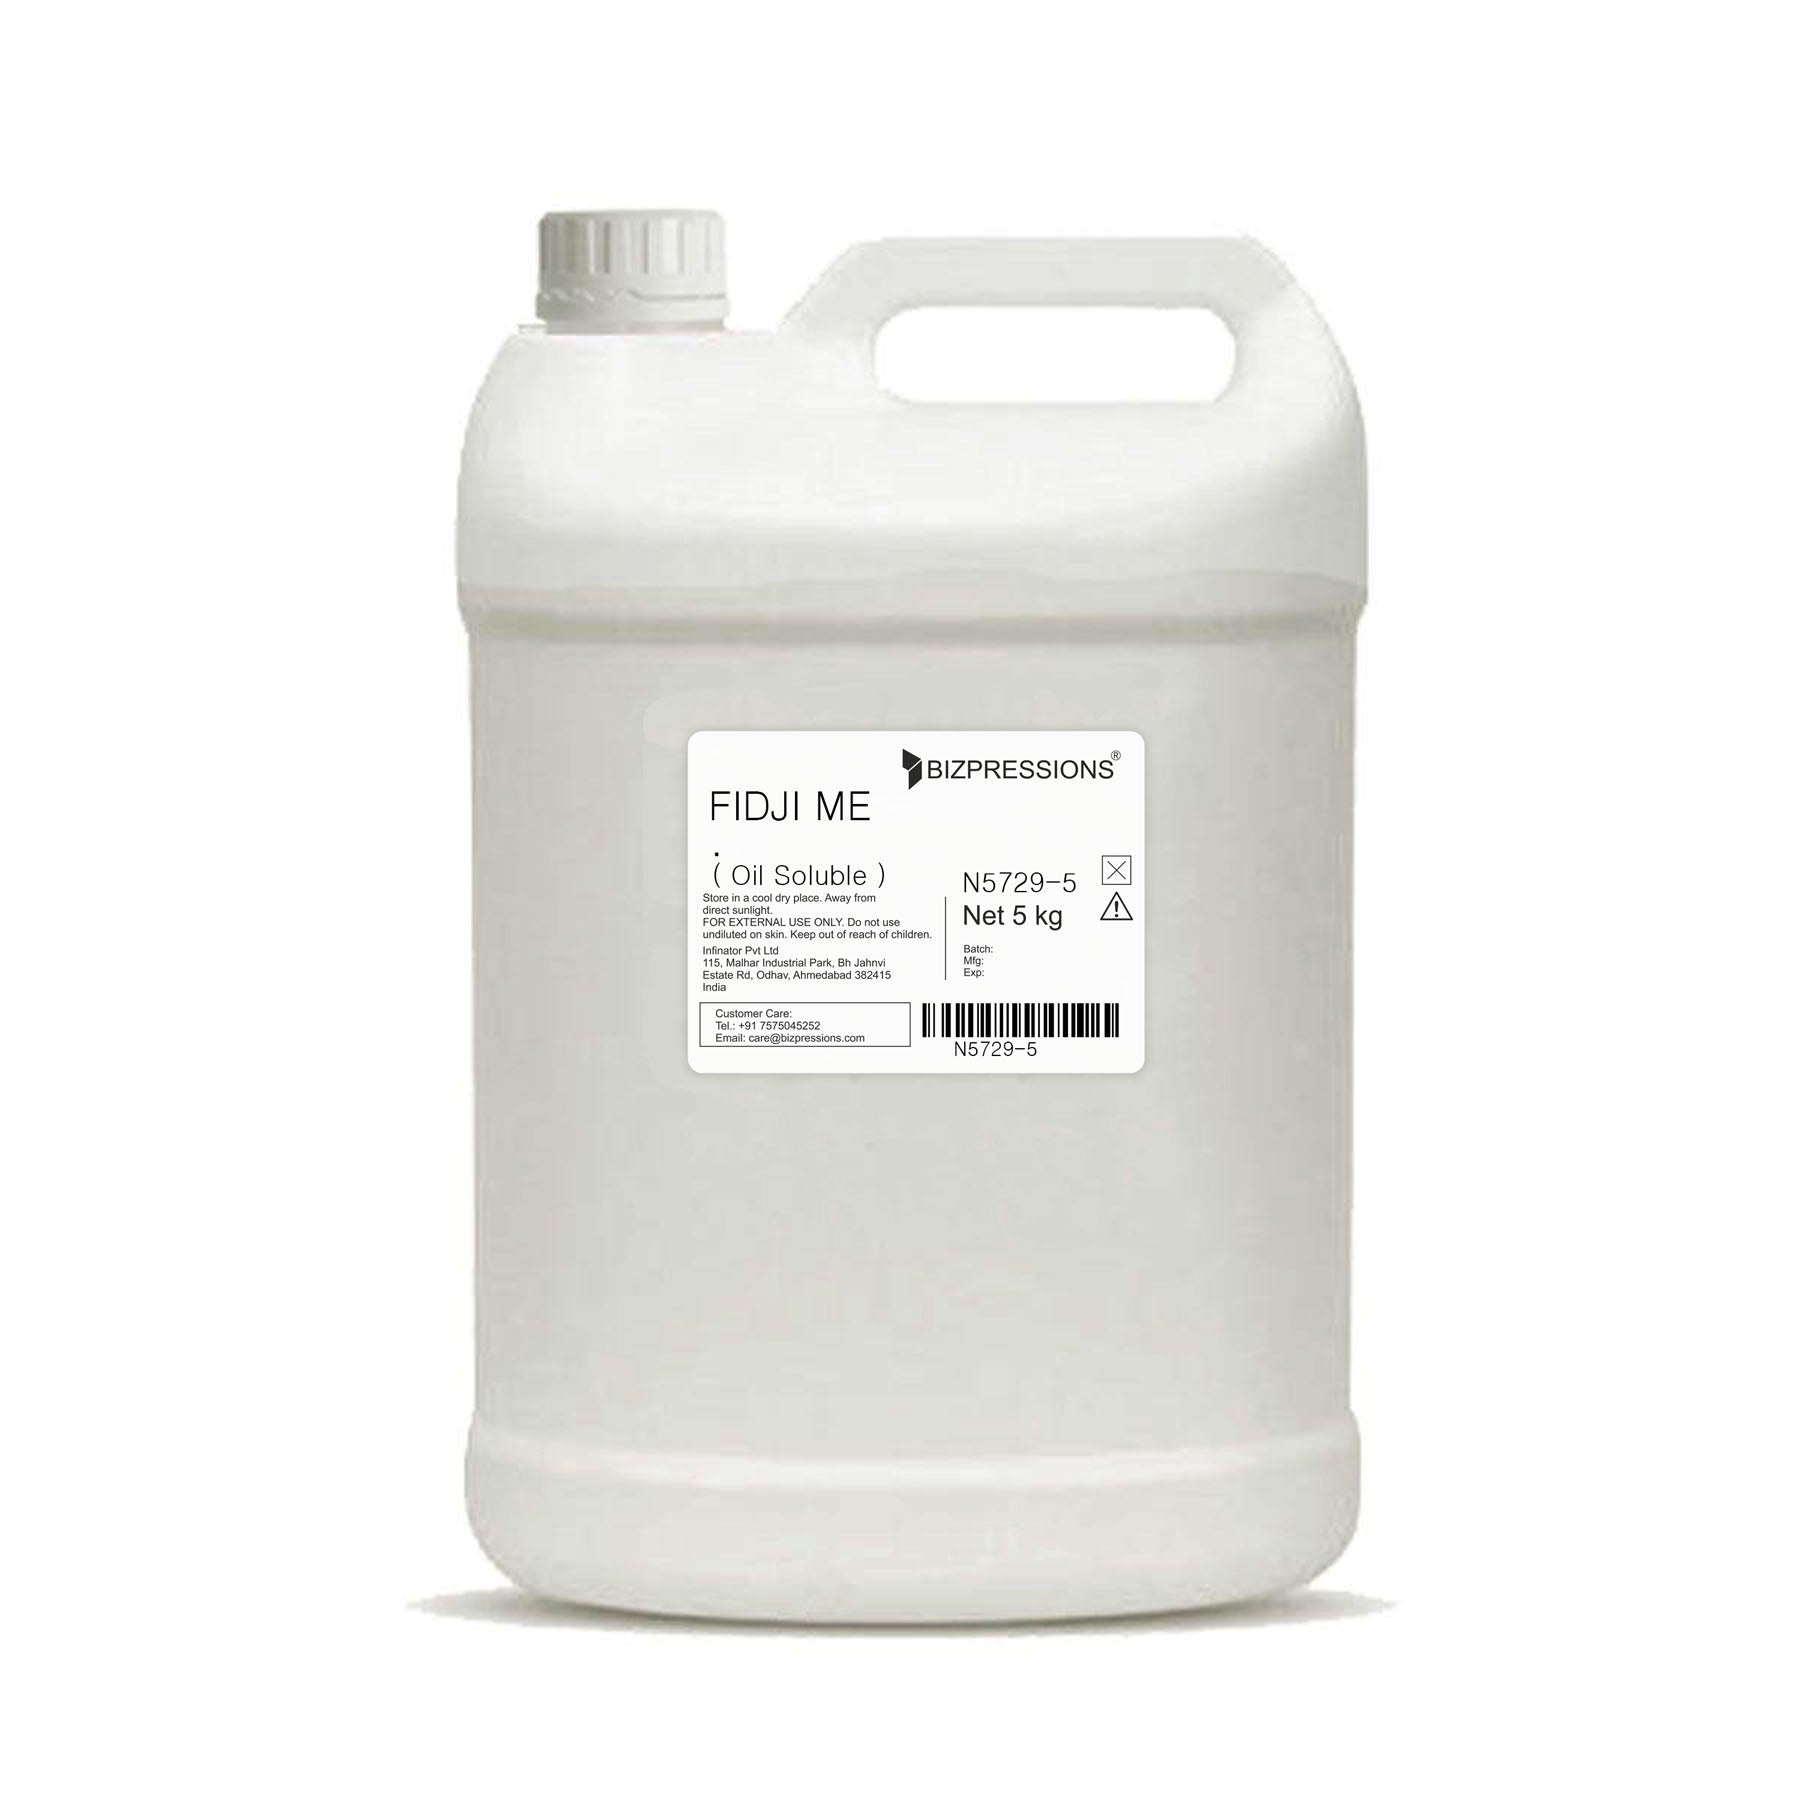 FIDJI ME - Fragrance ( Oil Soluble ) - 5 kg